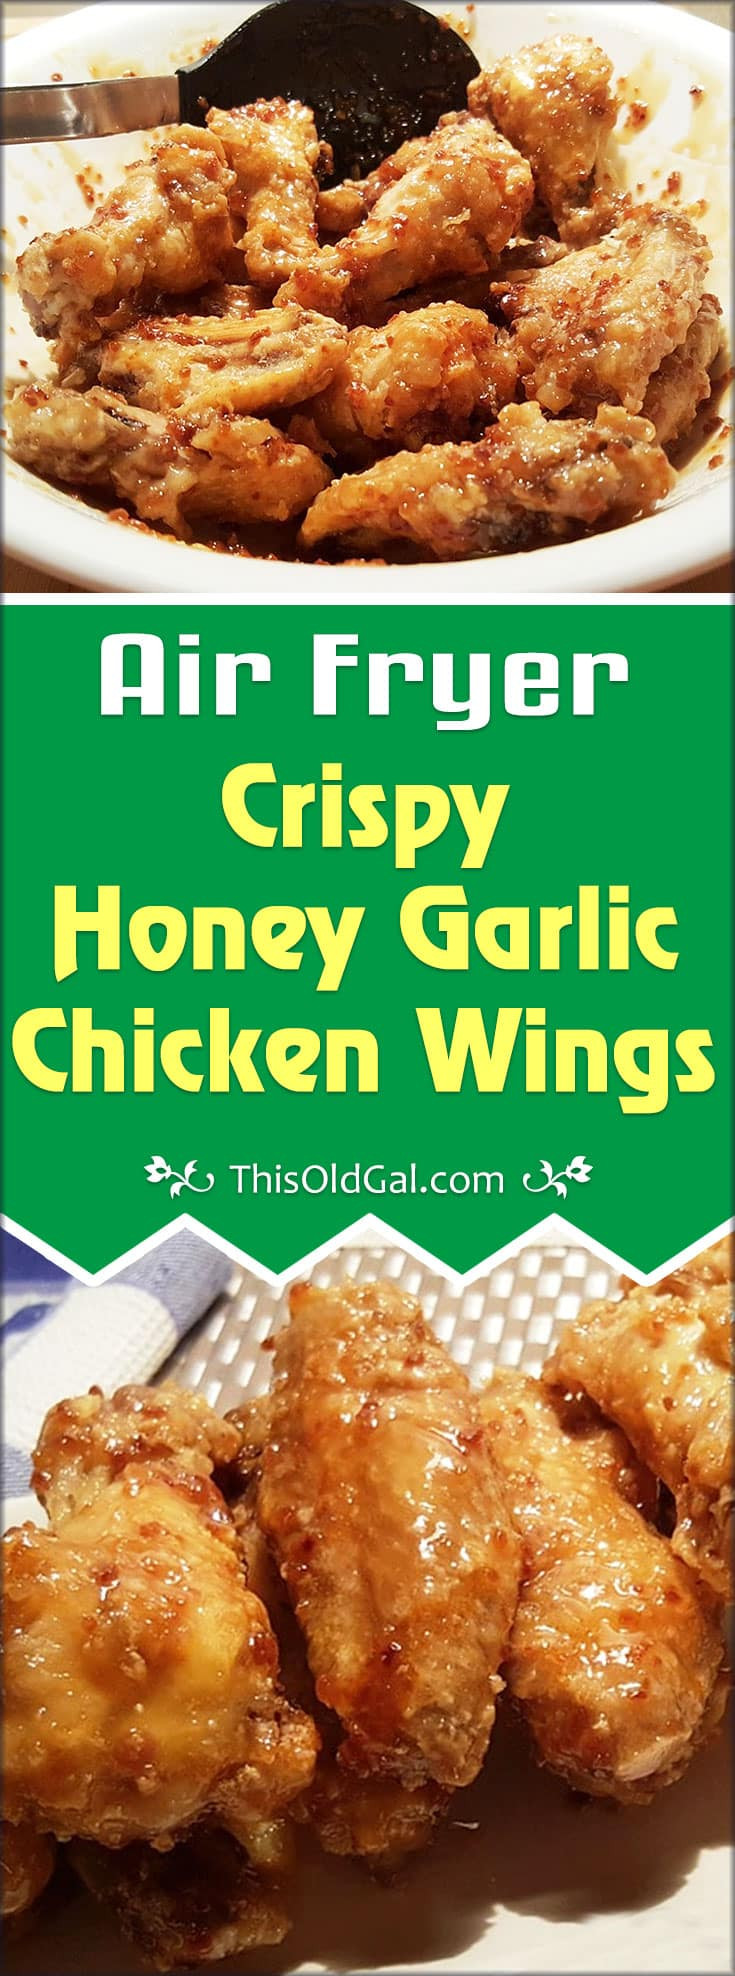 Air Fryer Crispy Chicken Wings
 Air Fryer Crispy Honey Garlic Chicken Wings